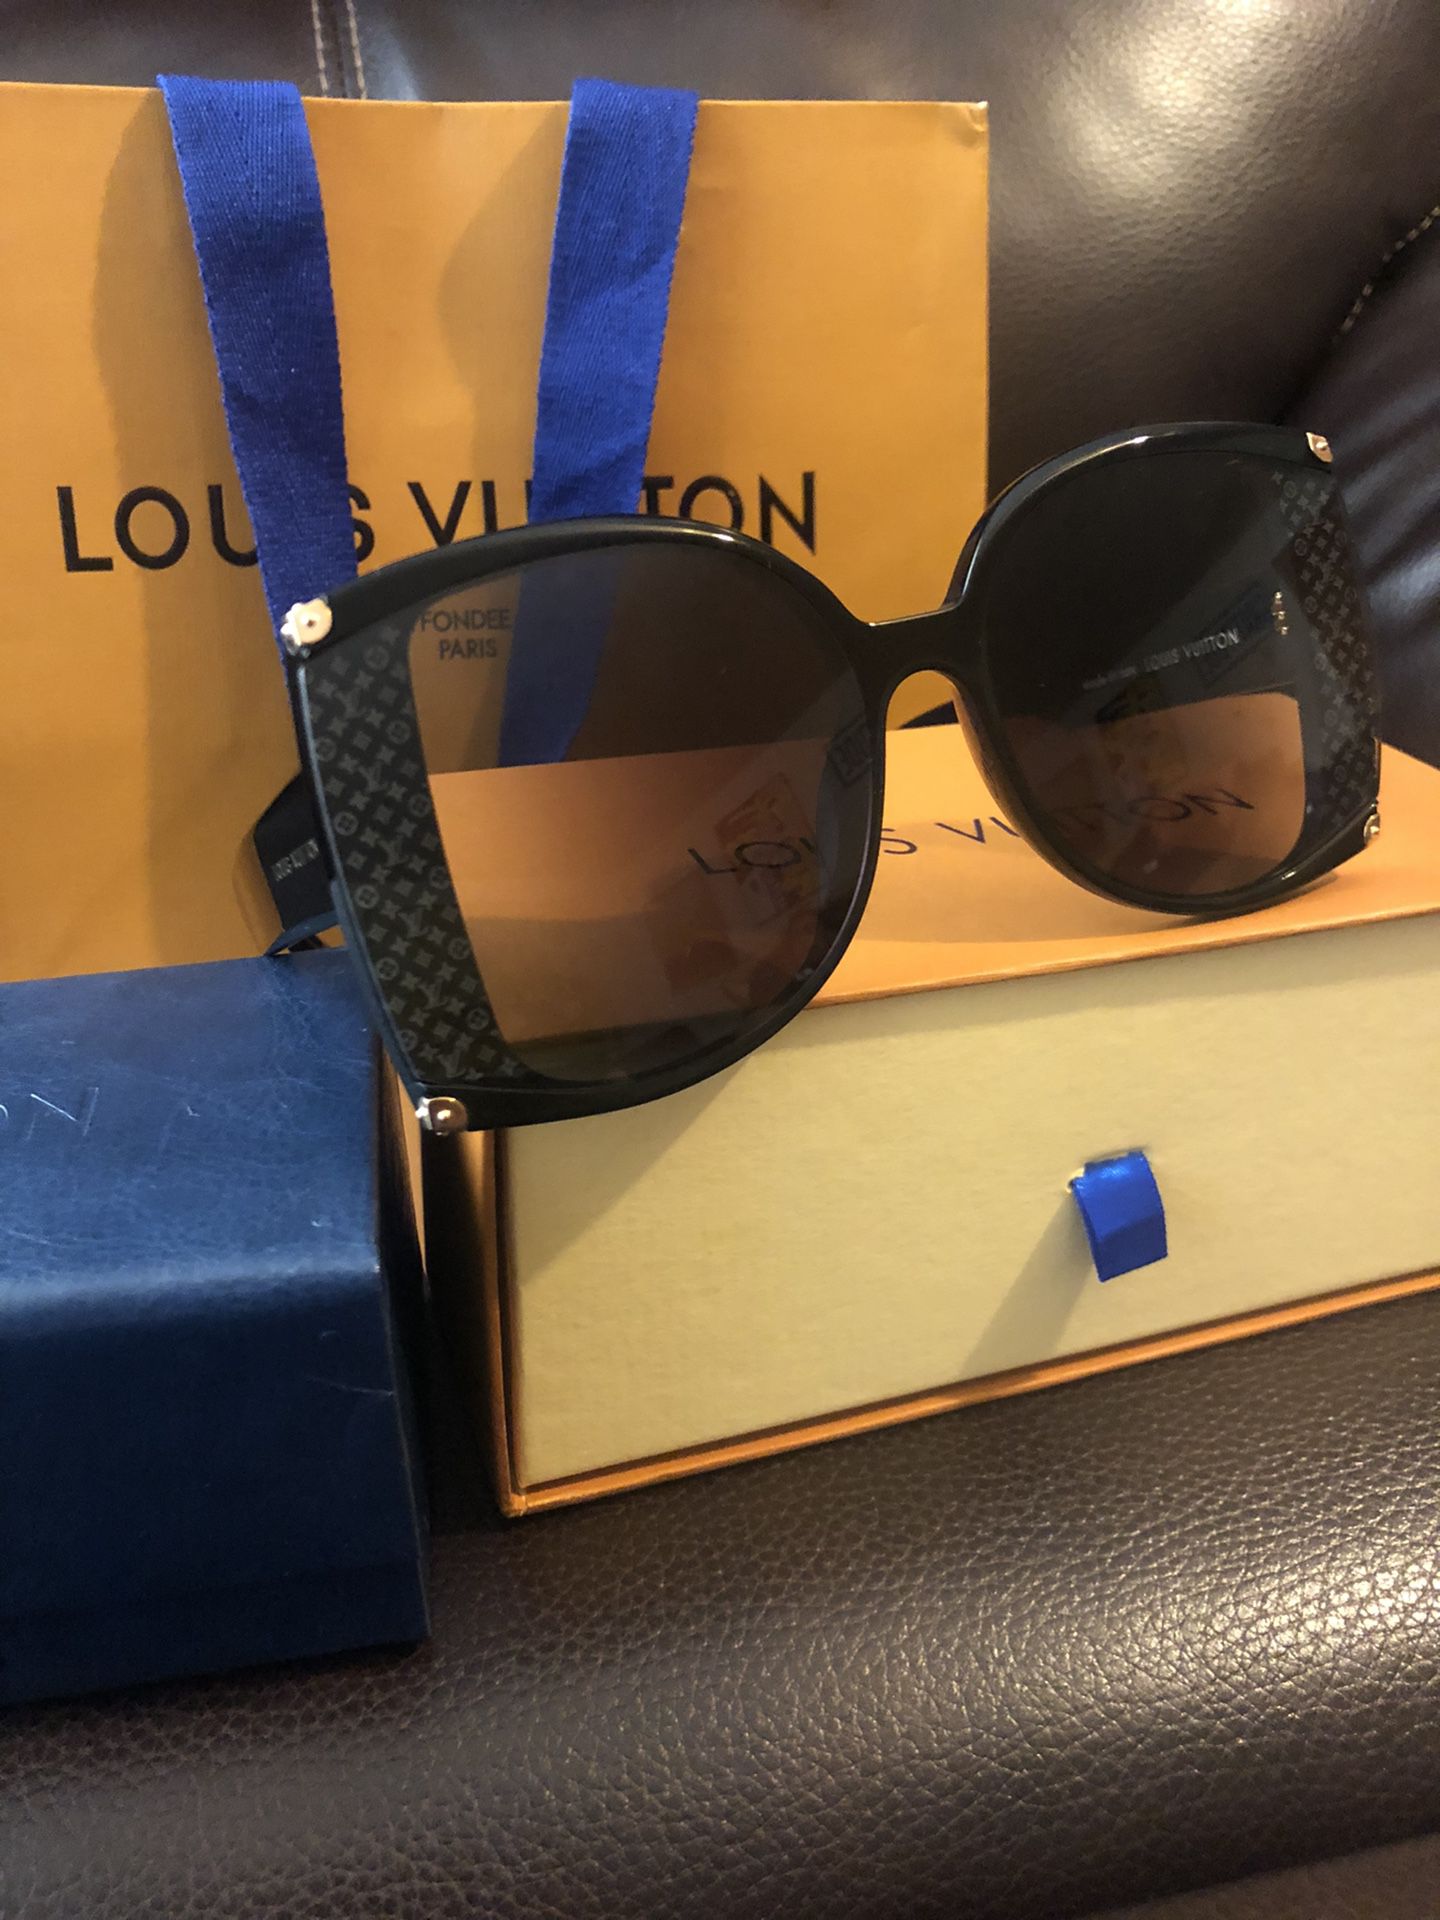 Louis Vuitton Sun Visor for Sale in Jersey City, NJ - OfferUp